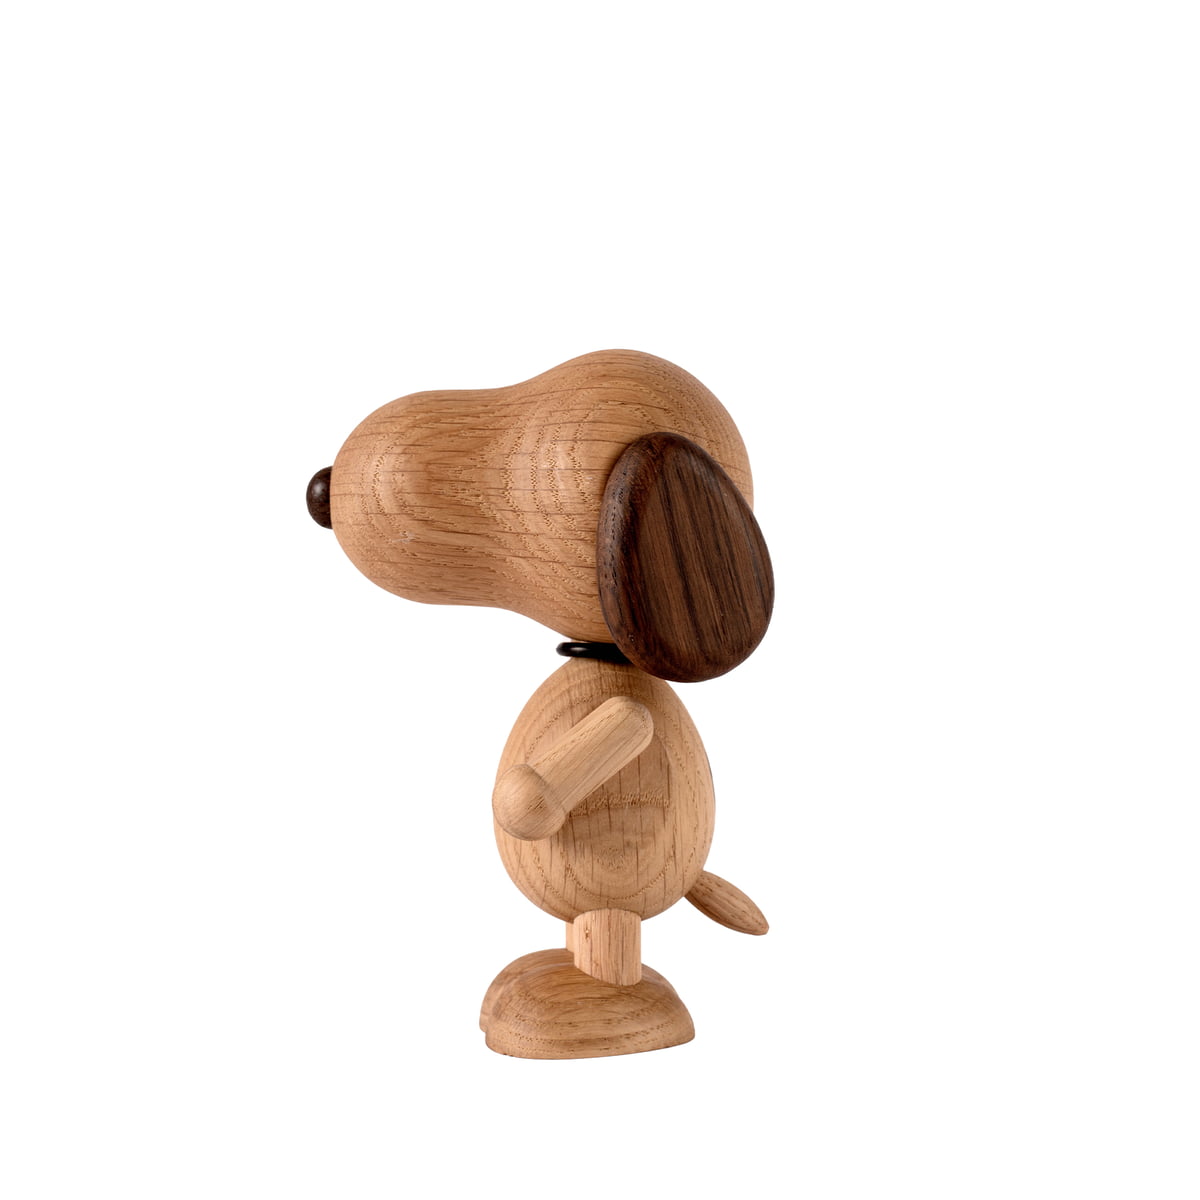 boyhood - Snoopy Wooden figure